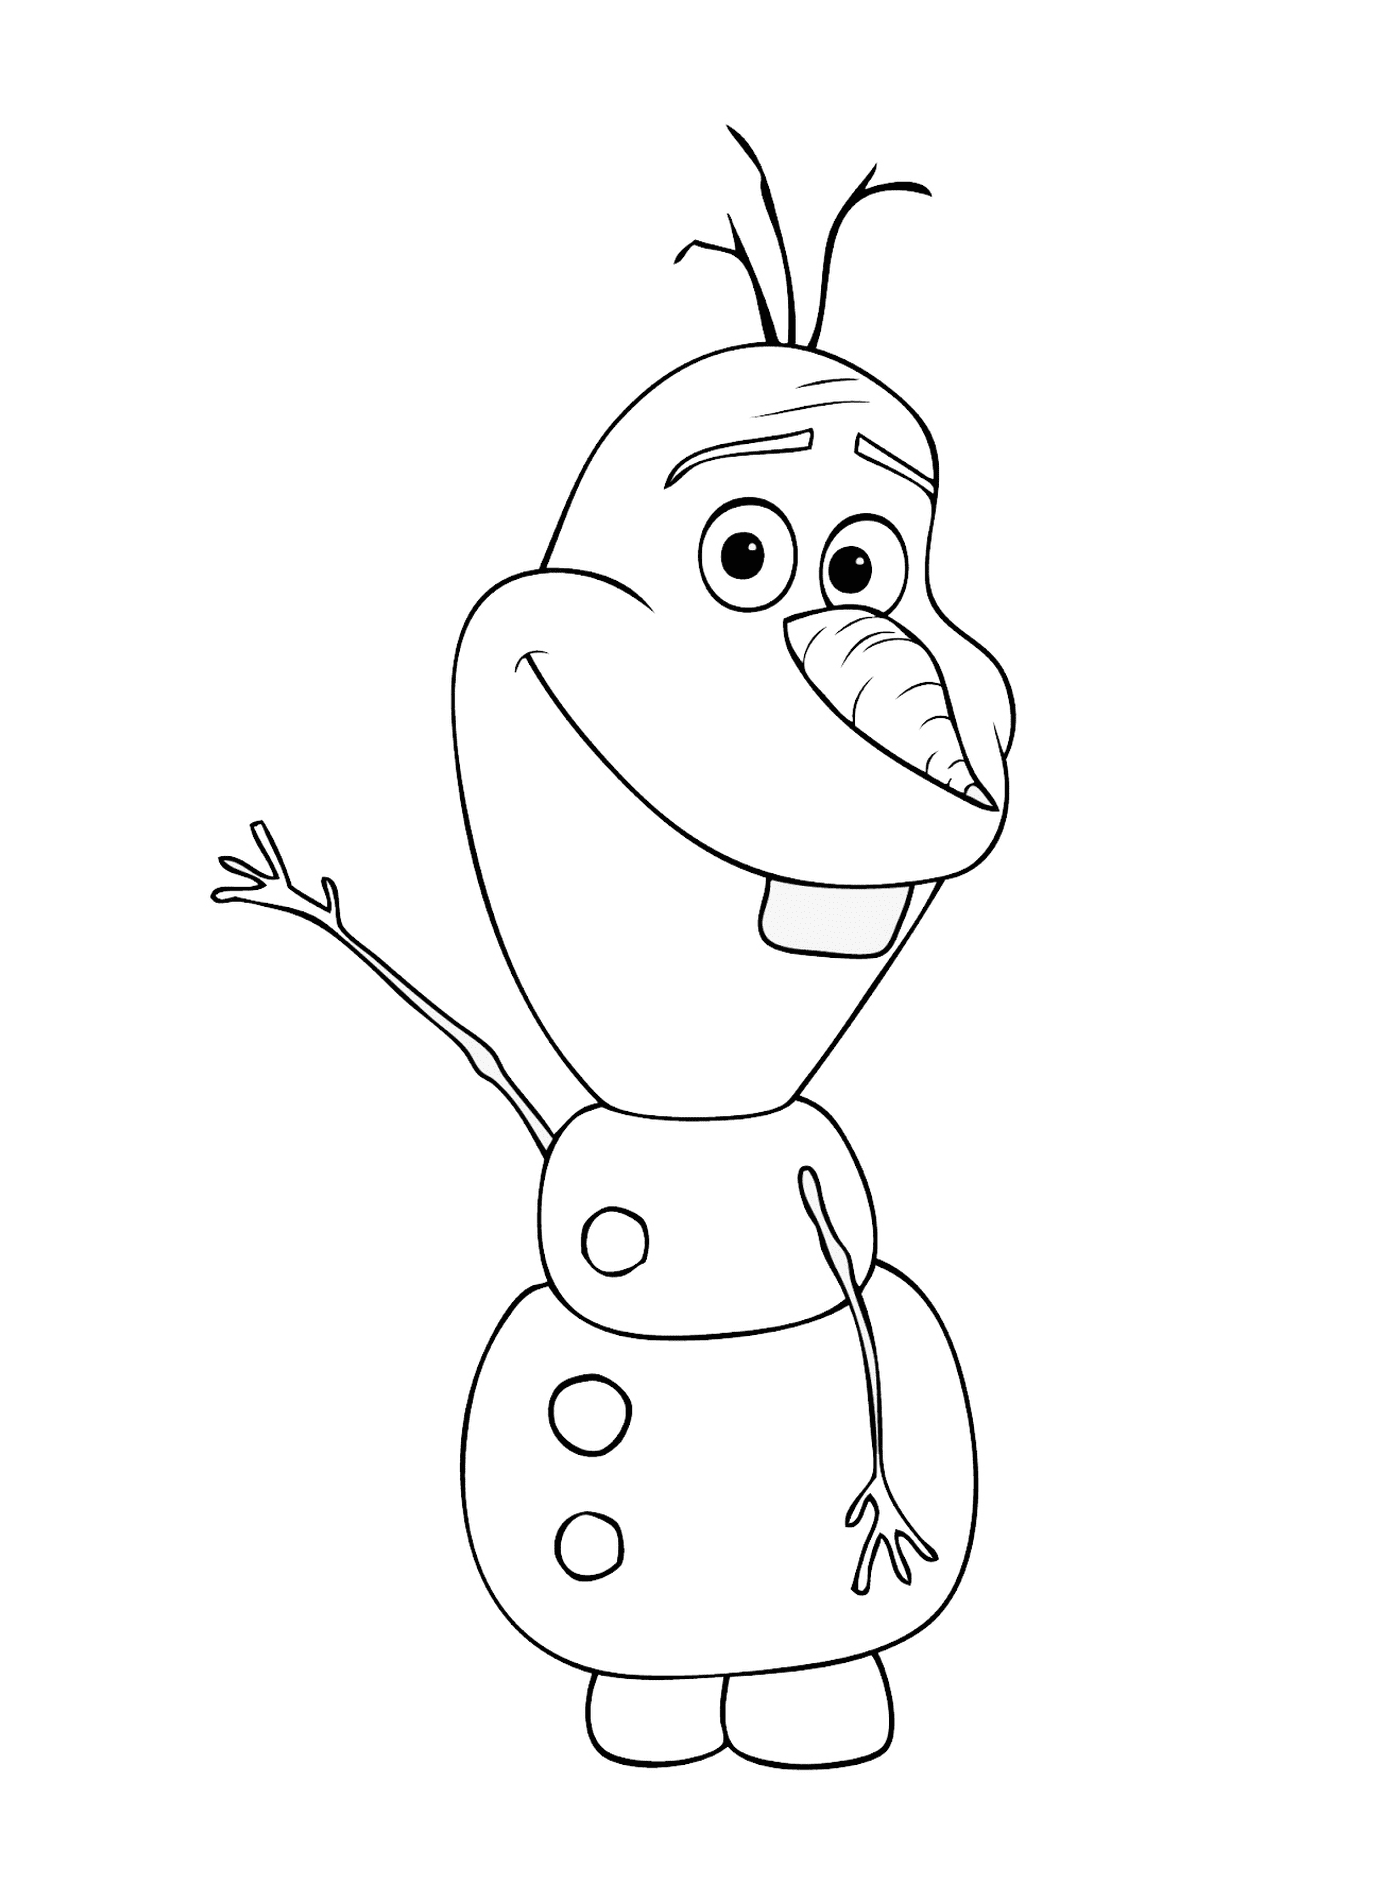  Olaf de Frozen makes a greeting 